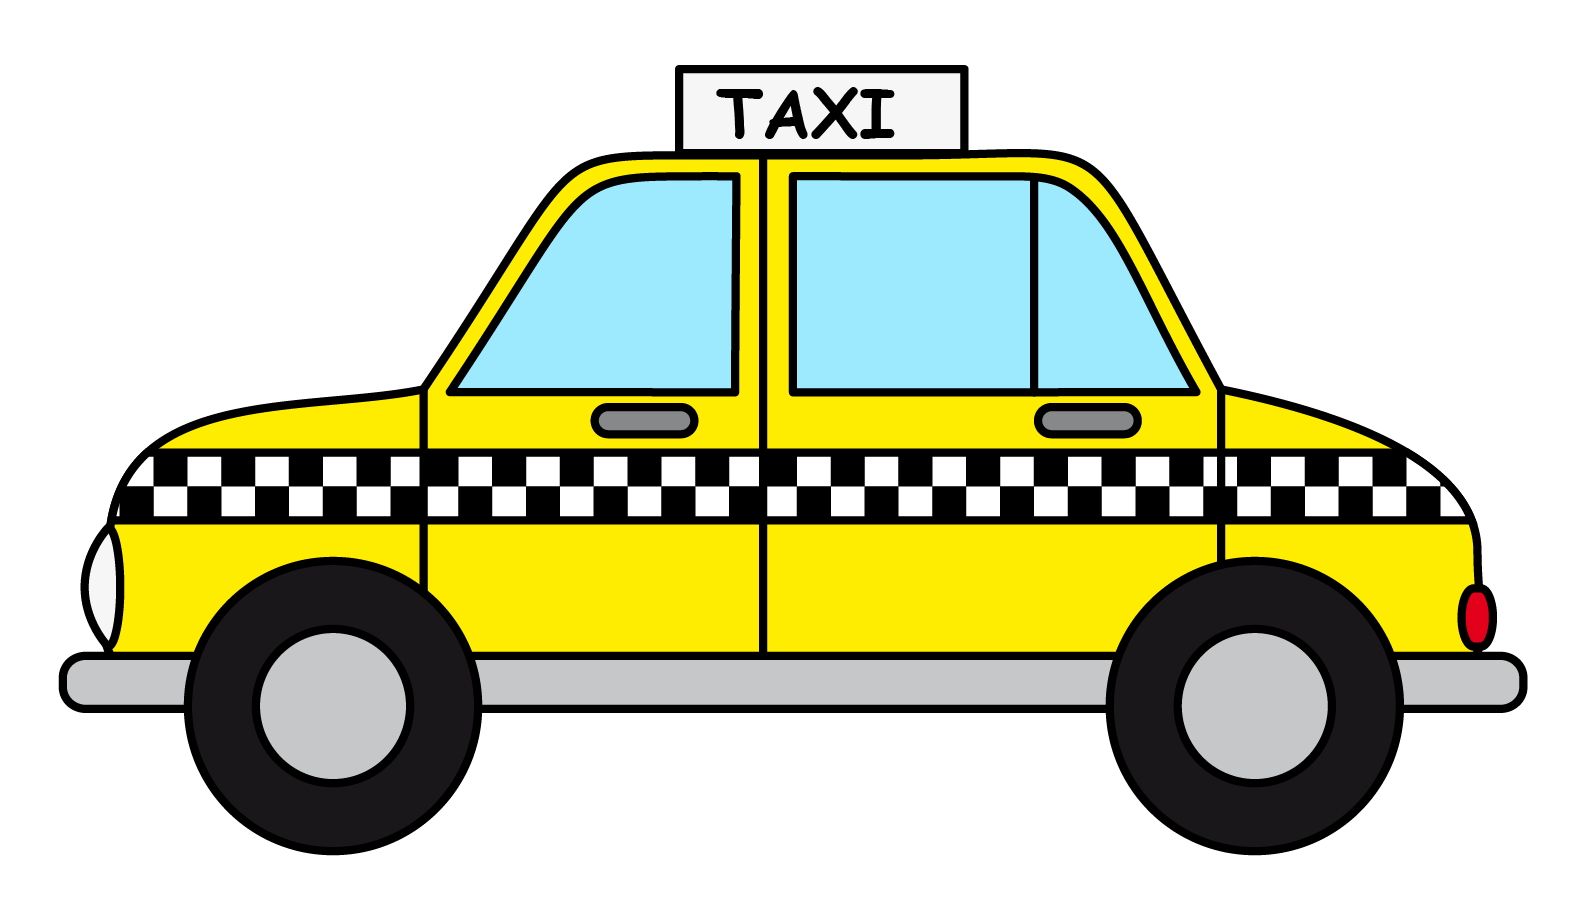 Taxi Cab Transparent Background